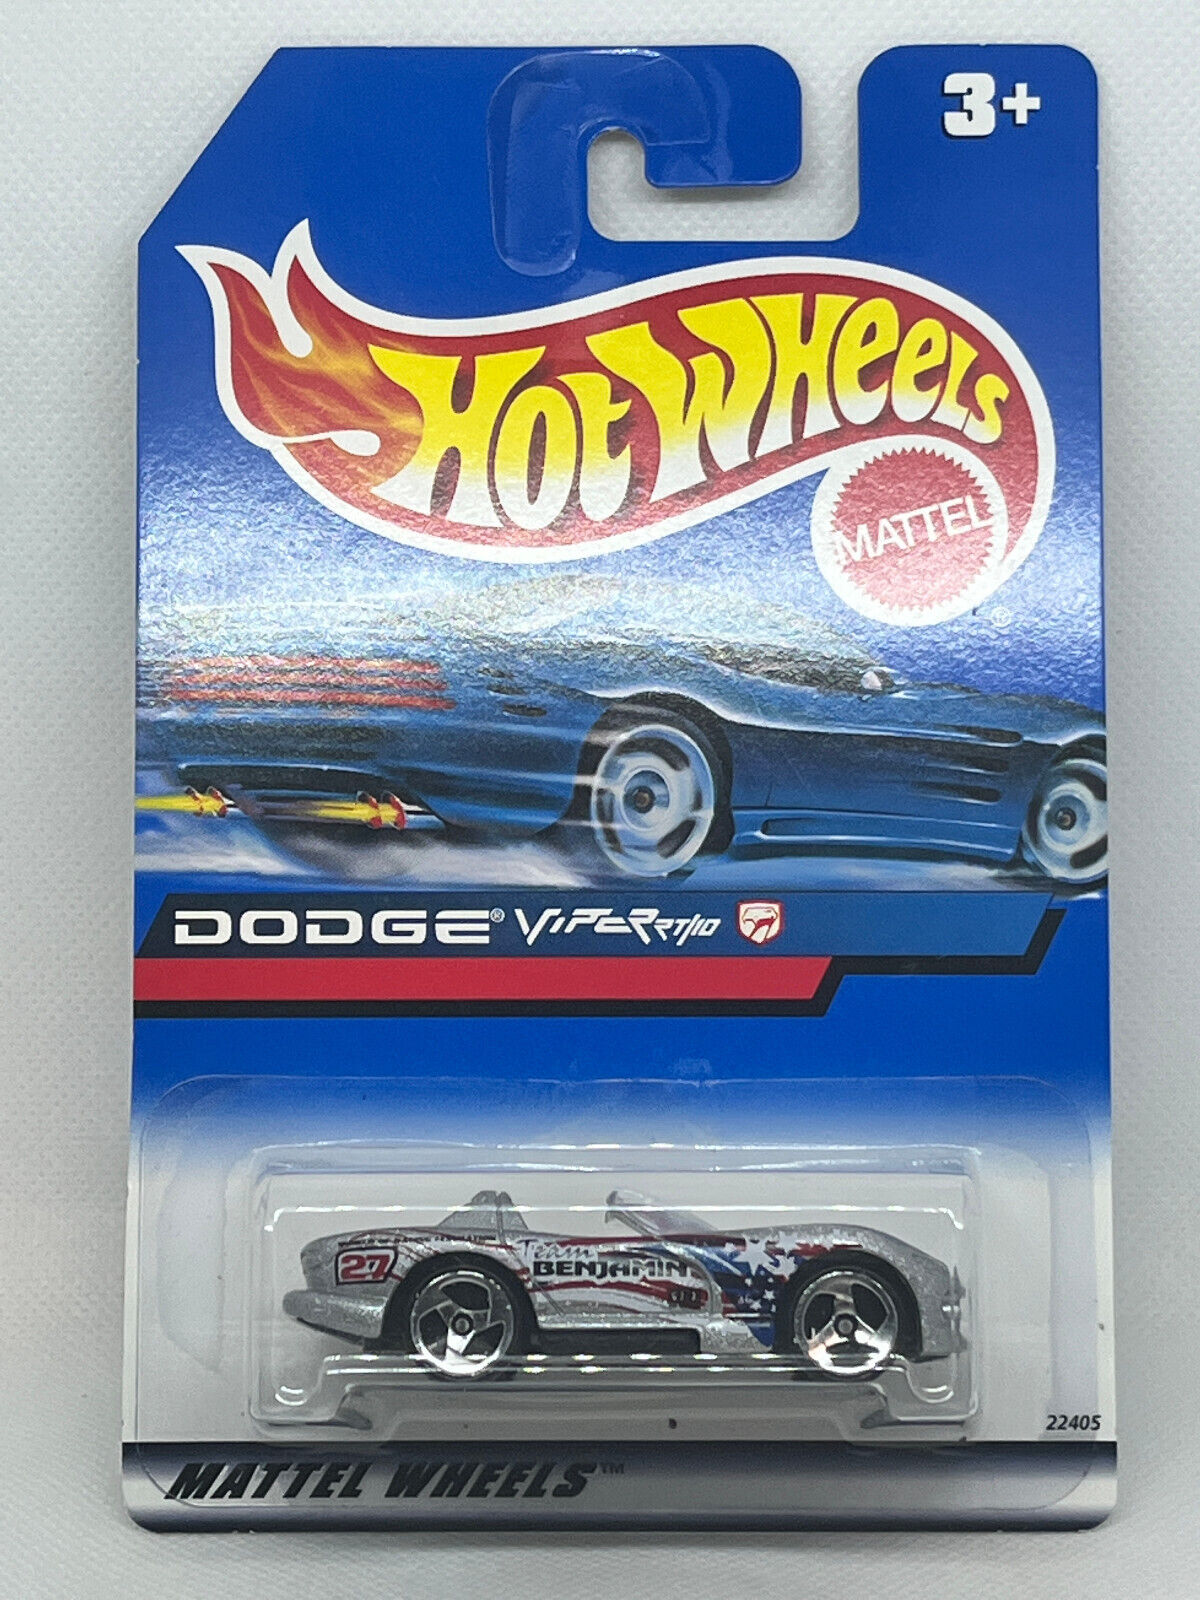 1999 Hot Wheels Team Benjamin #27 Dodge Viper RT/10 NIP